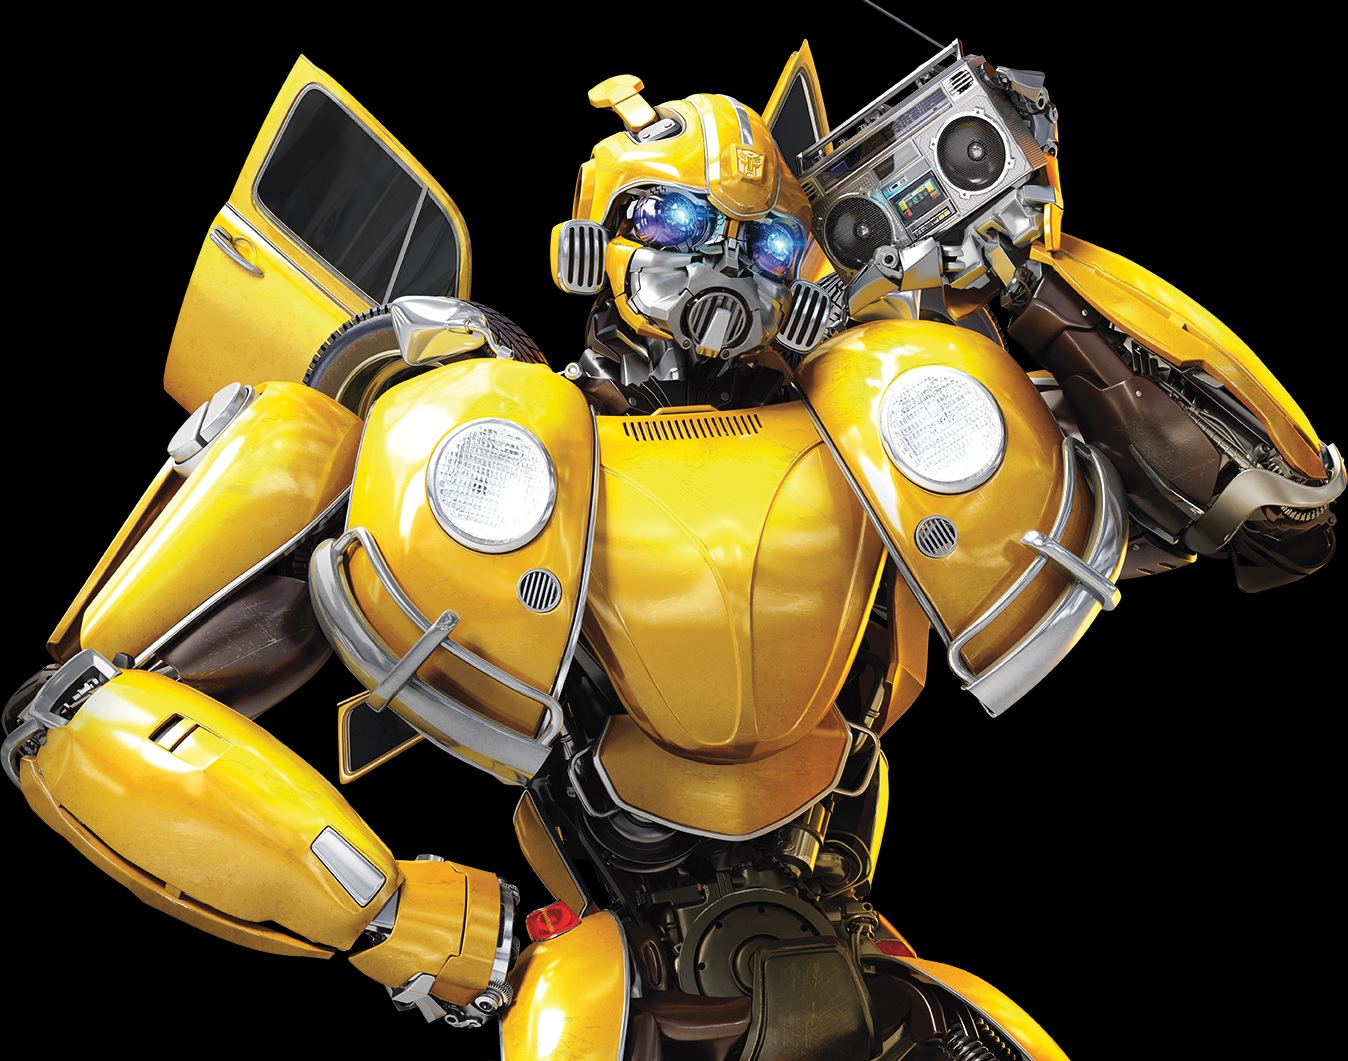 transformers bumblebee soundtrack